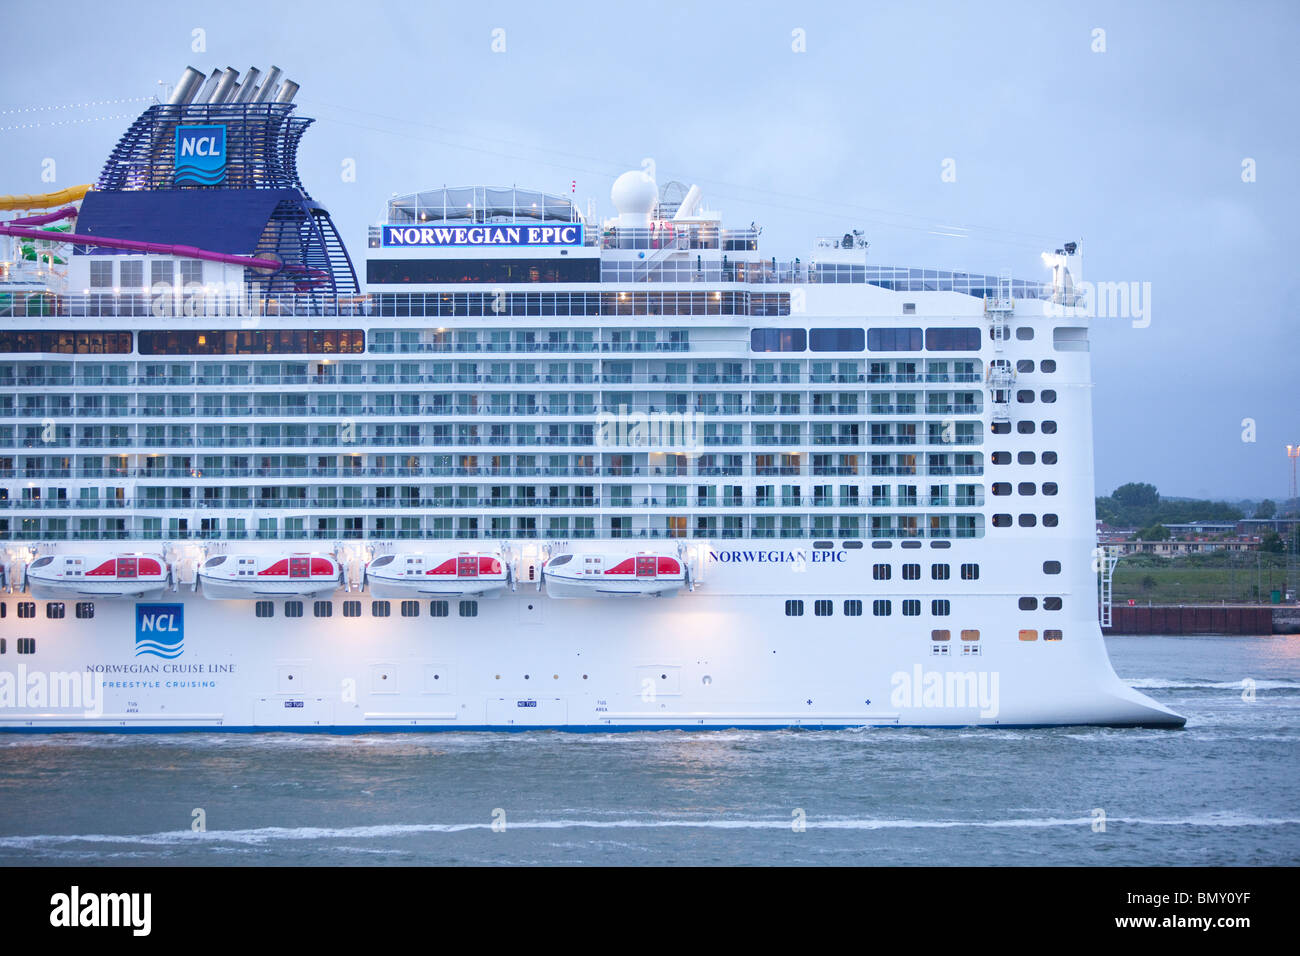 stern-of-the-norwegian-cruise-lines-ncl-cruise-ship-norwegian-epic-BMY0YF.jpg